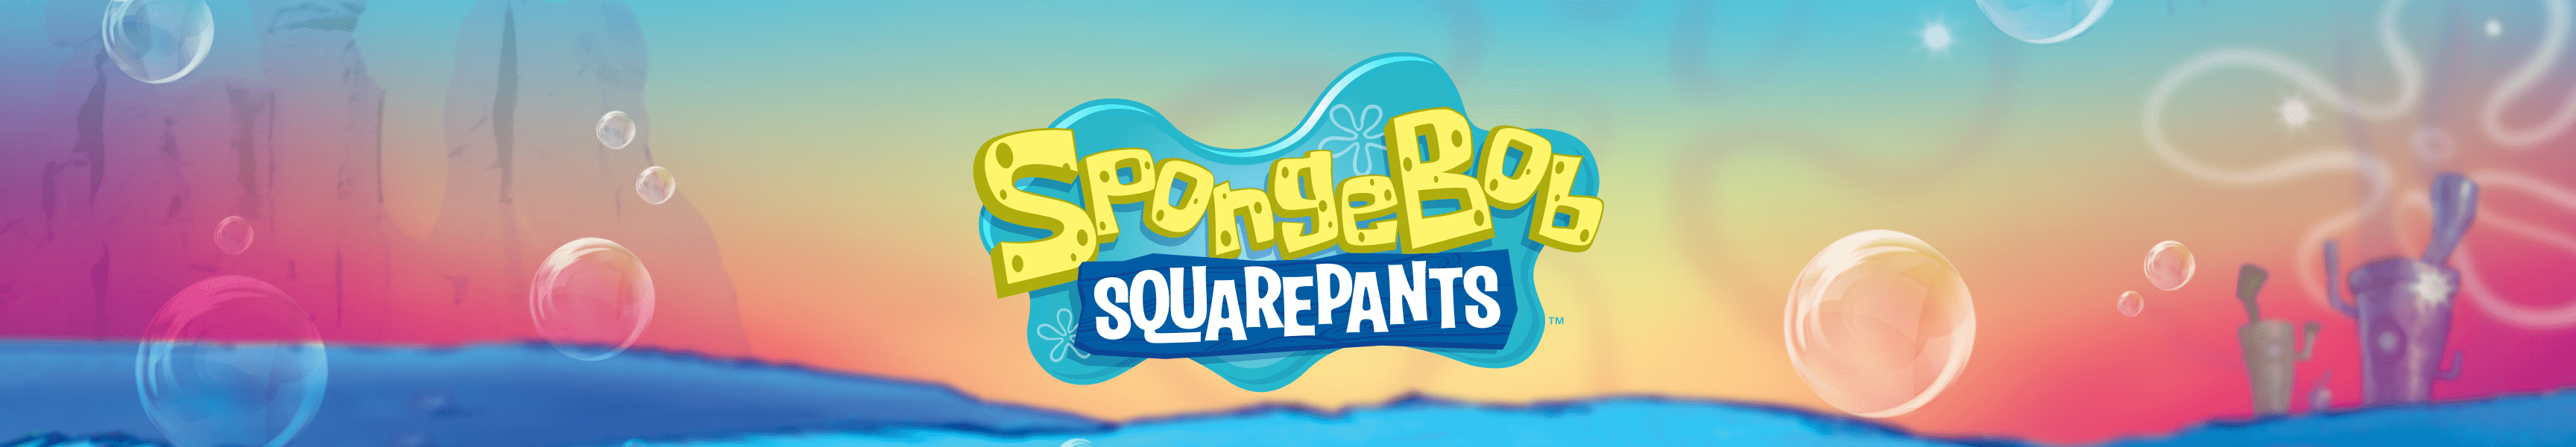 SpongeBob SquarePants Personalized